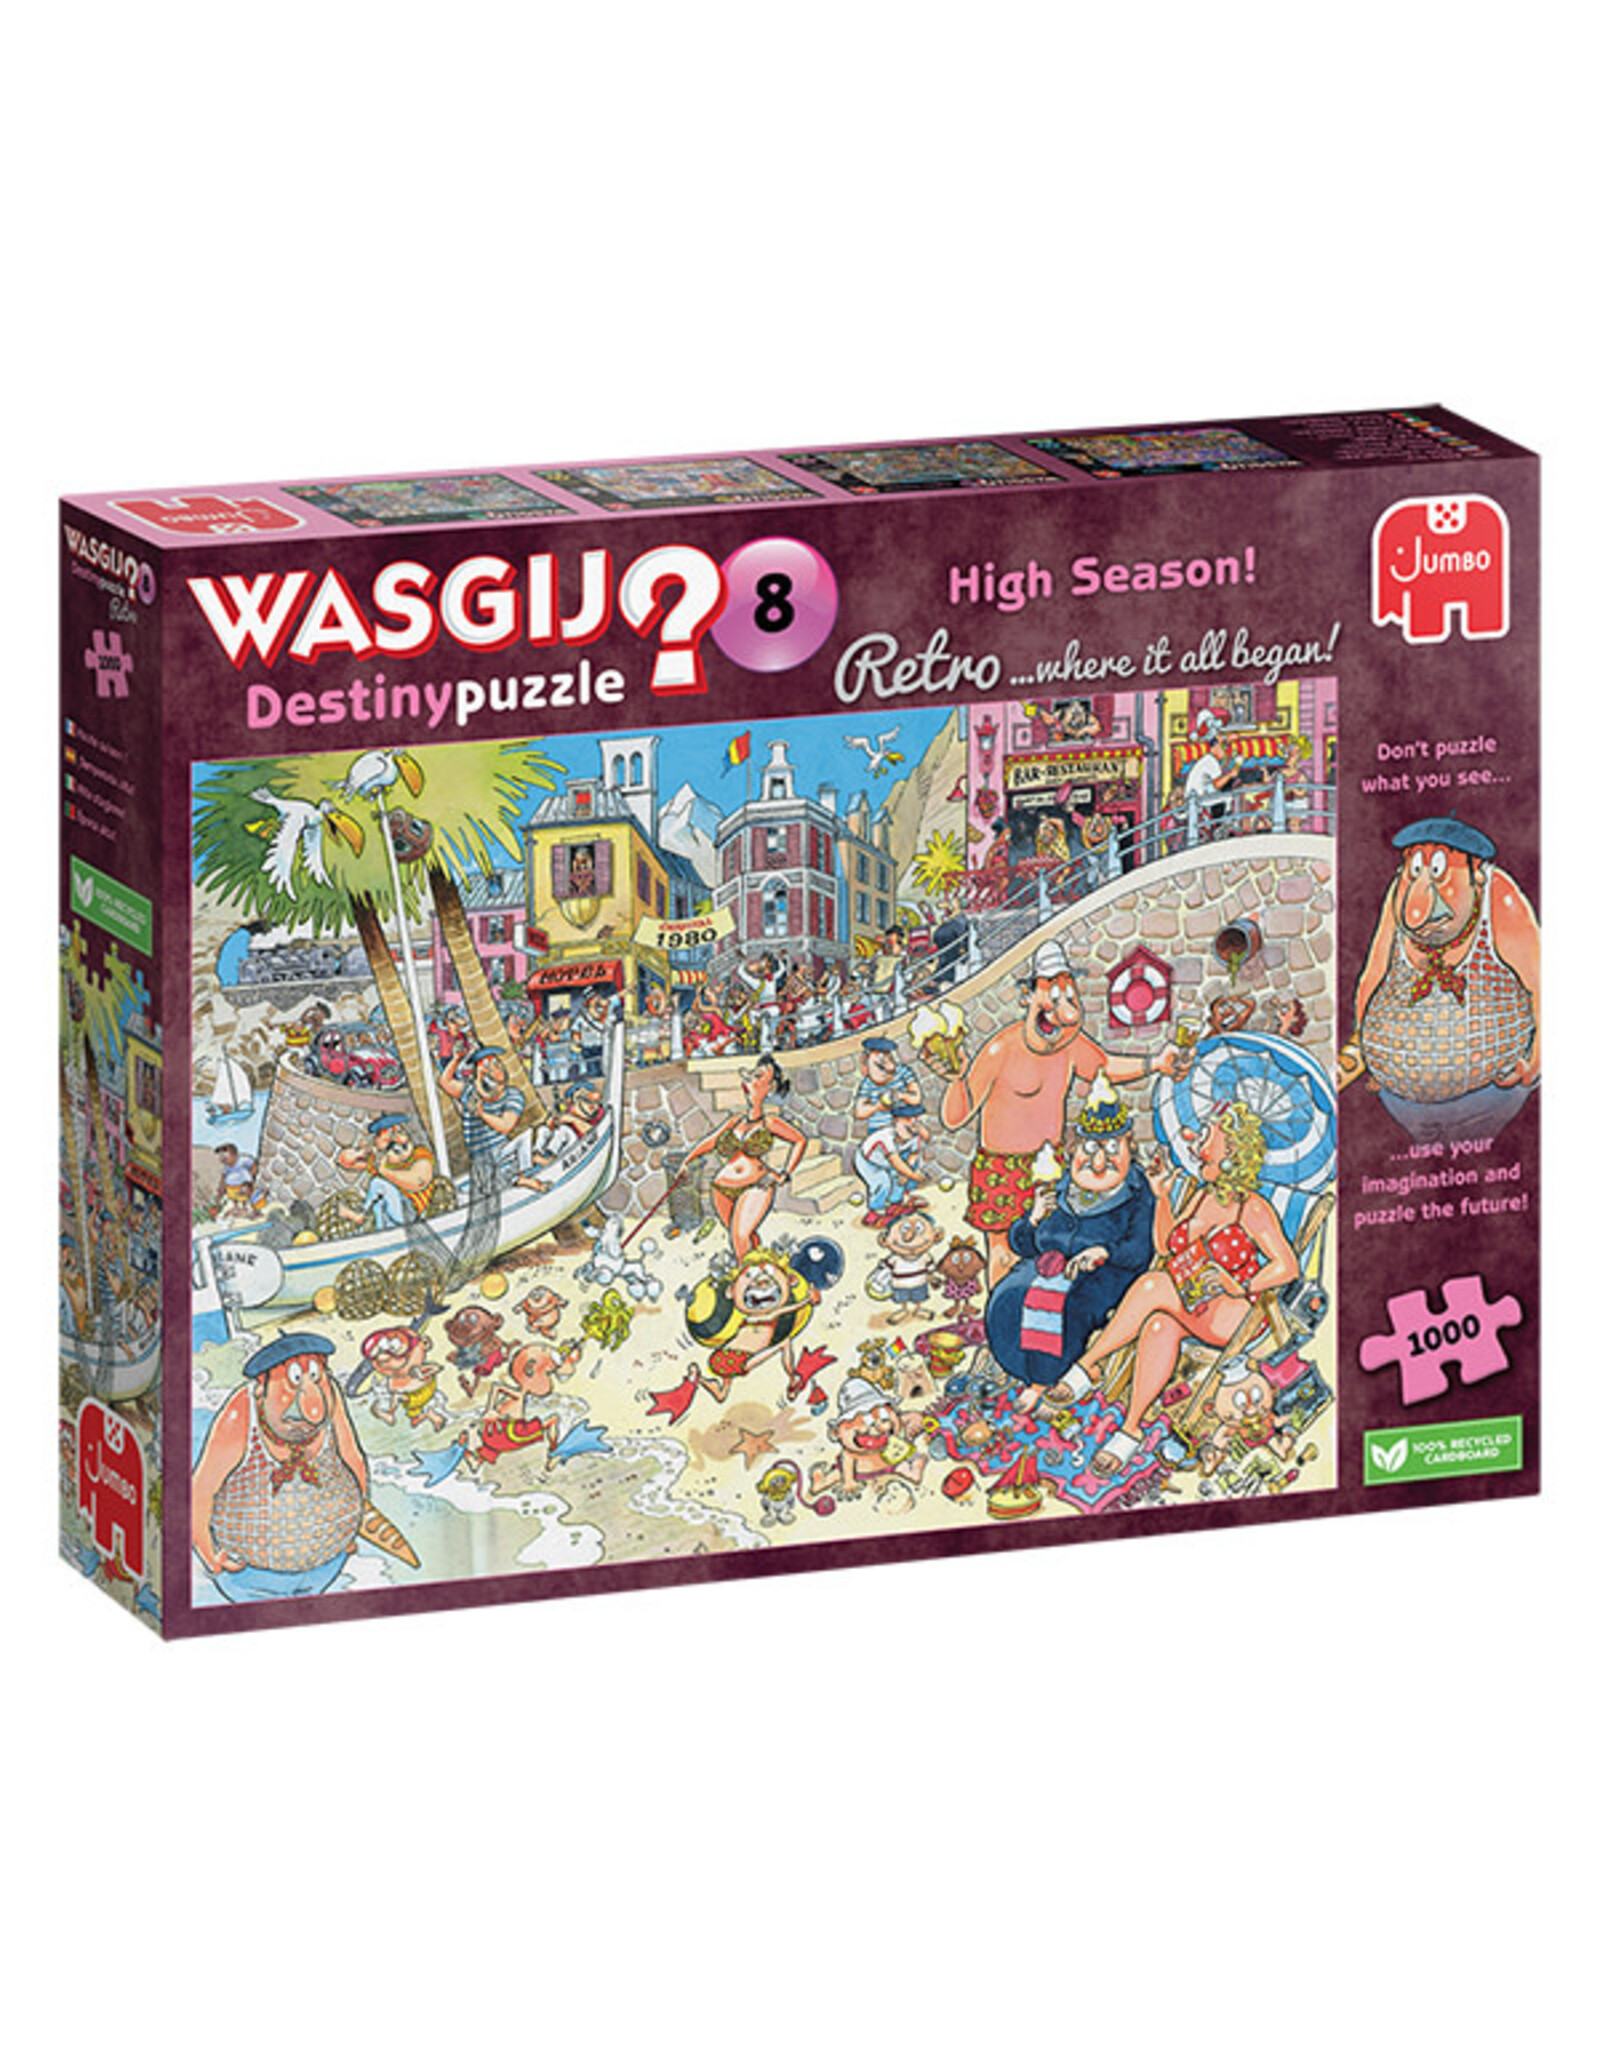 Jumbo Wasgij Retro Destiny #8 - High Season! 1000pc